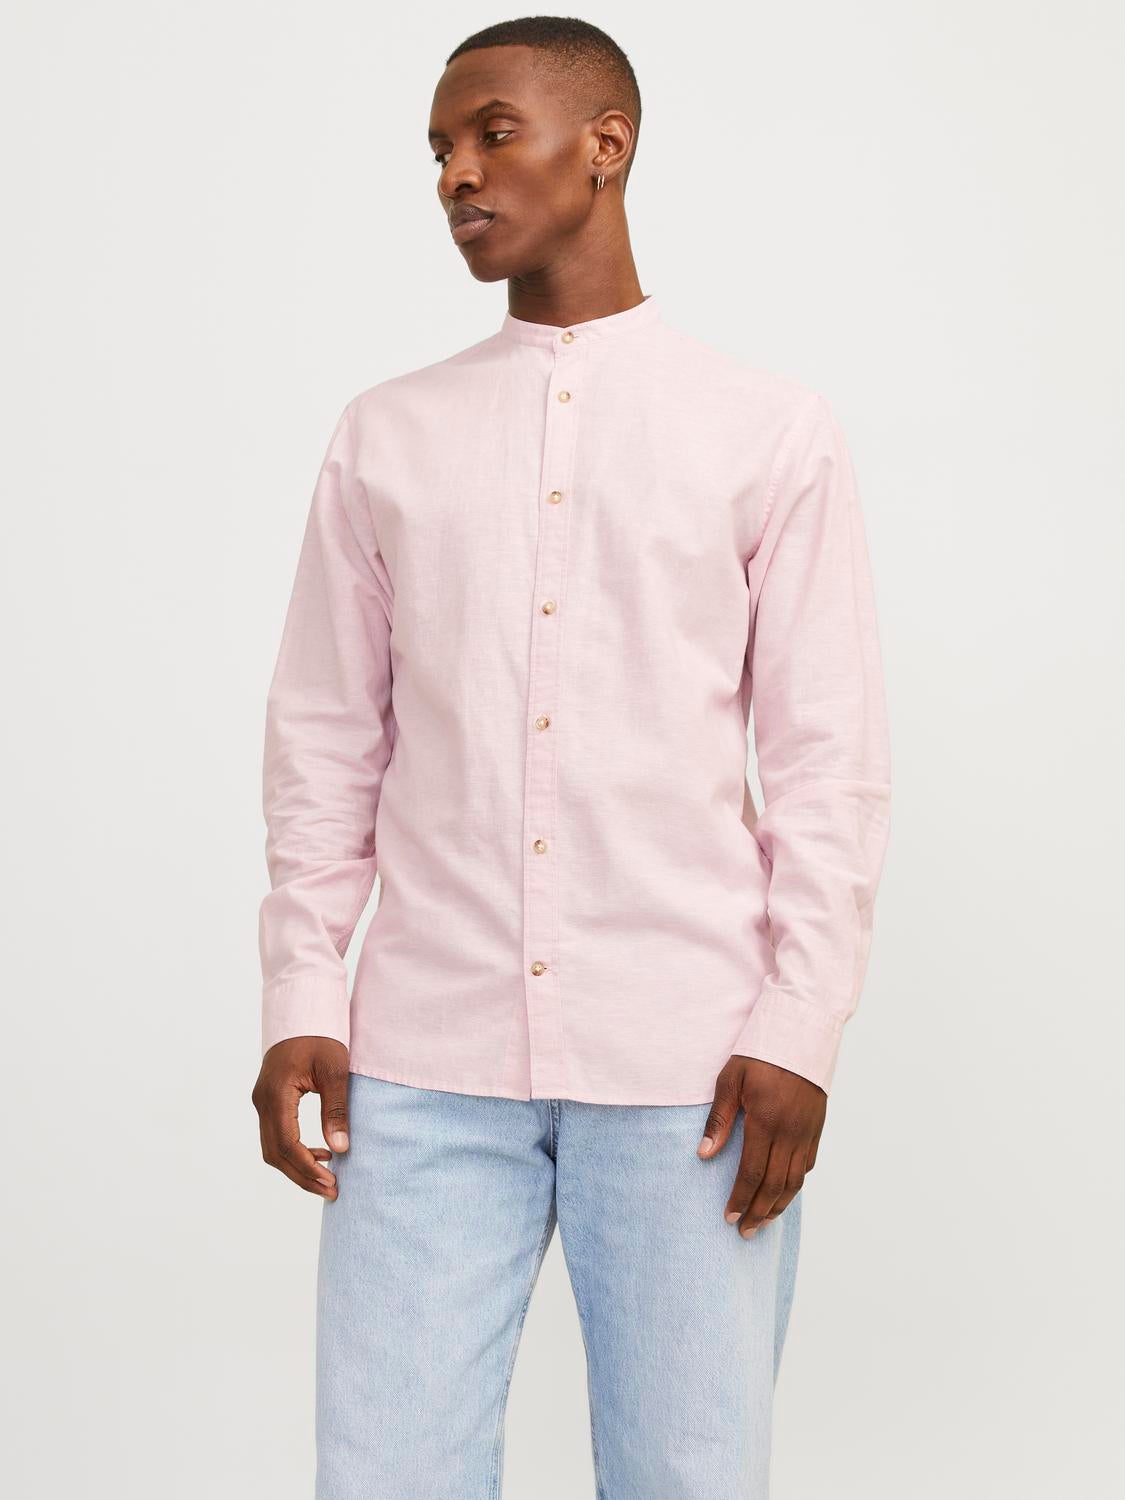 Allen Solly Men Striped Formal Pink Shirt - Buy Allen Solly Men Striped  Formal Pink Shirt Online at Best Prices in India | Flipkart.com